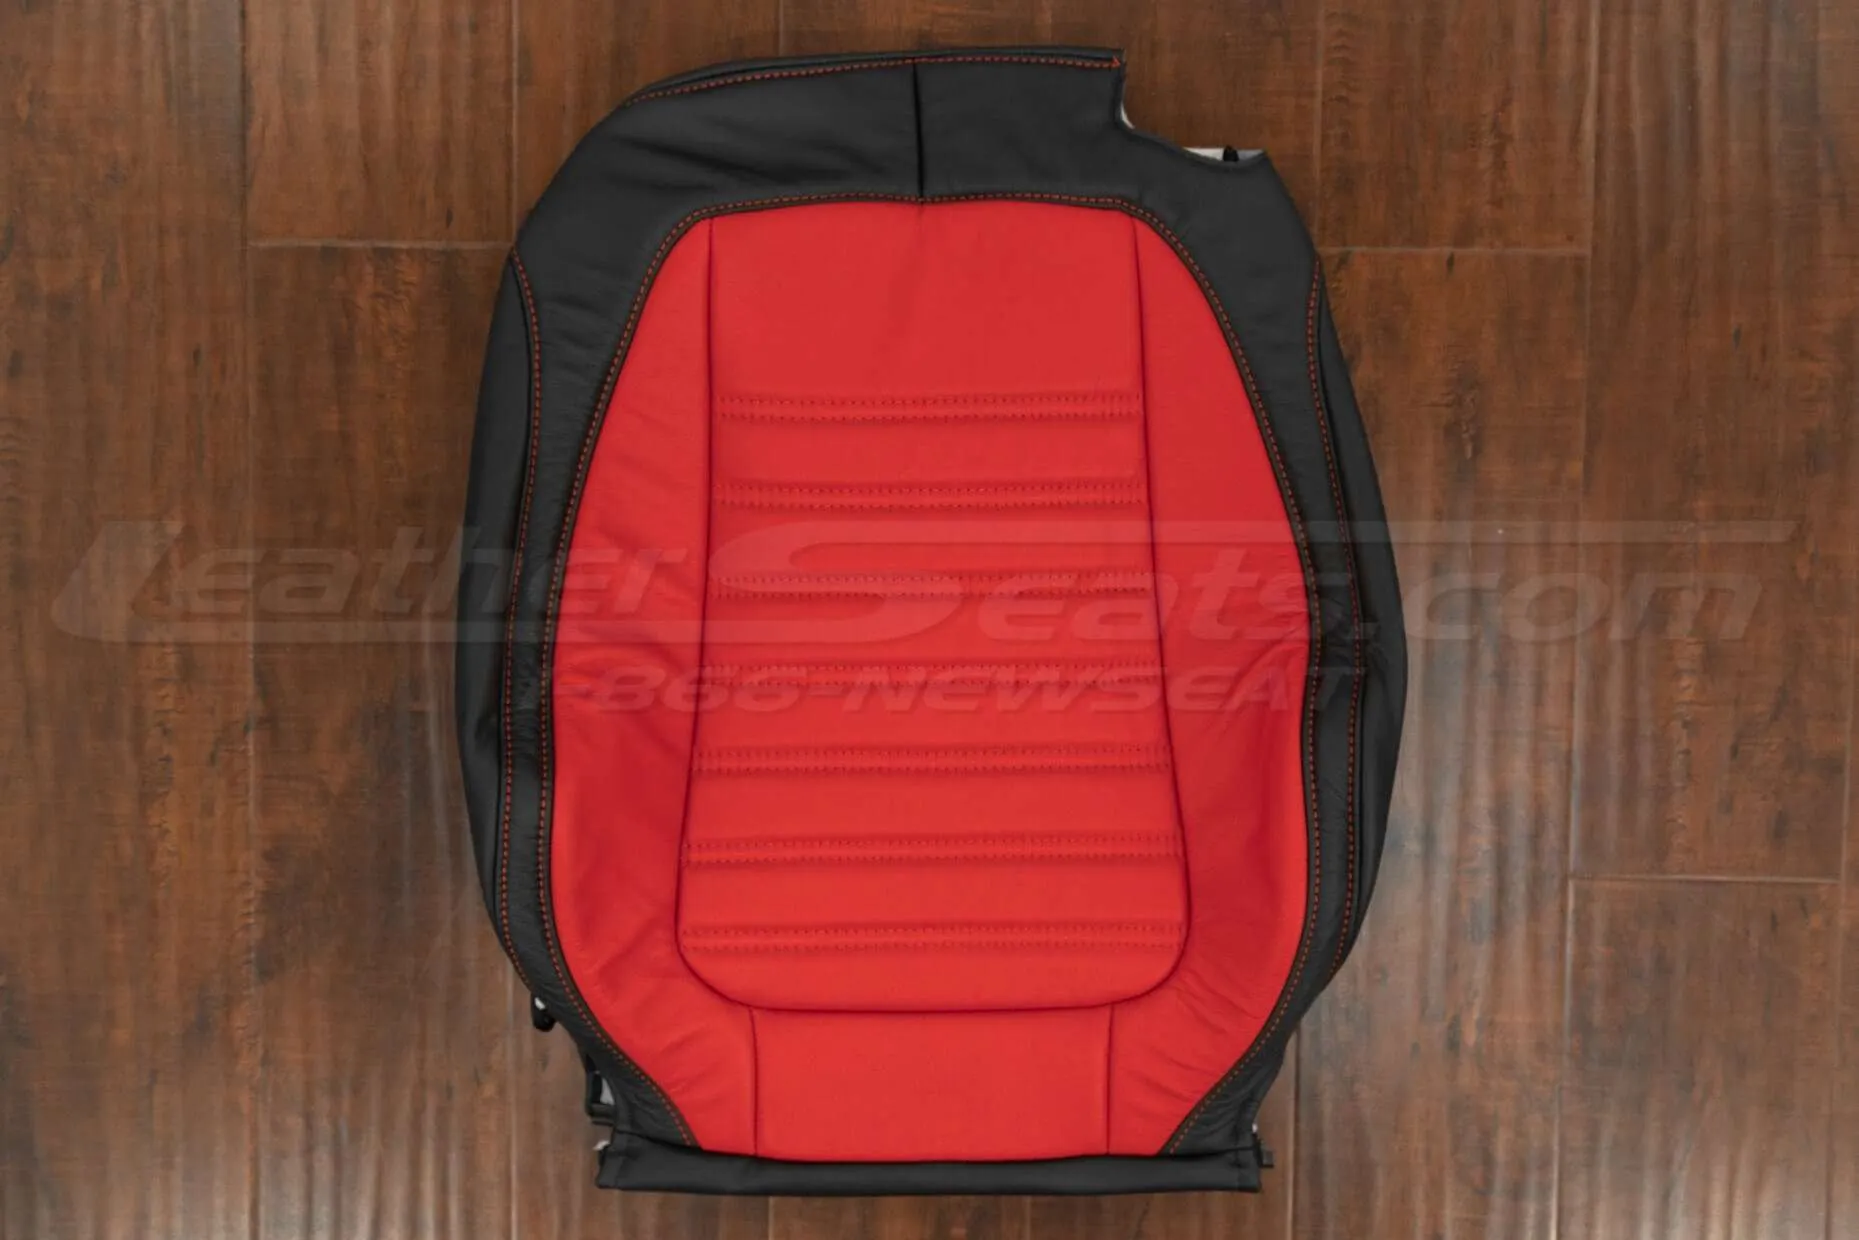 Black & Bright Red Backrest upholstery